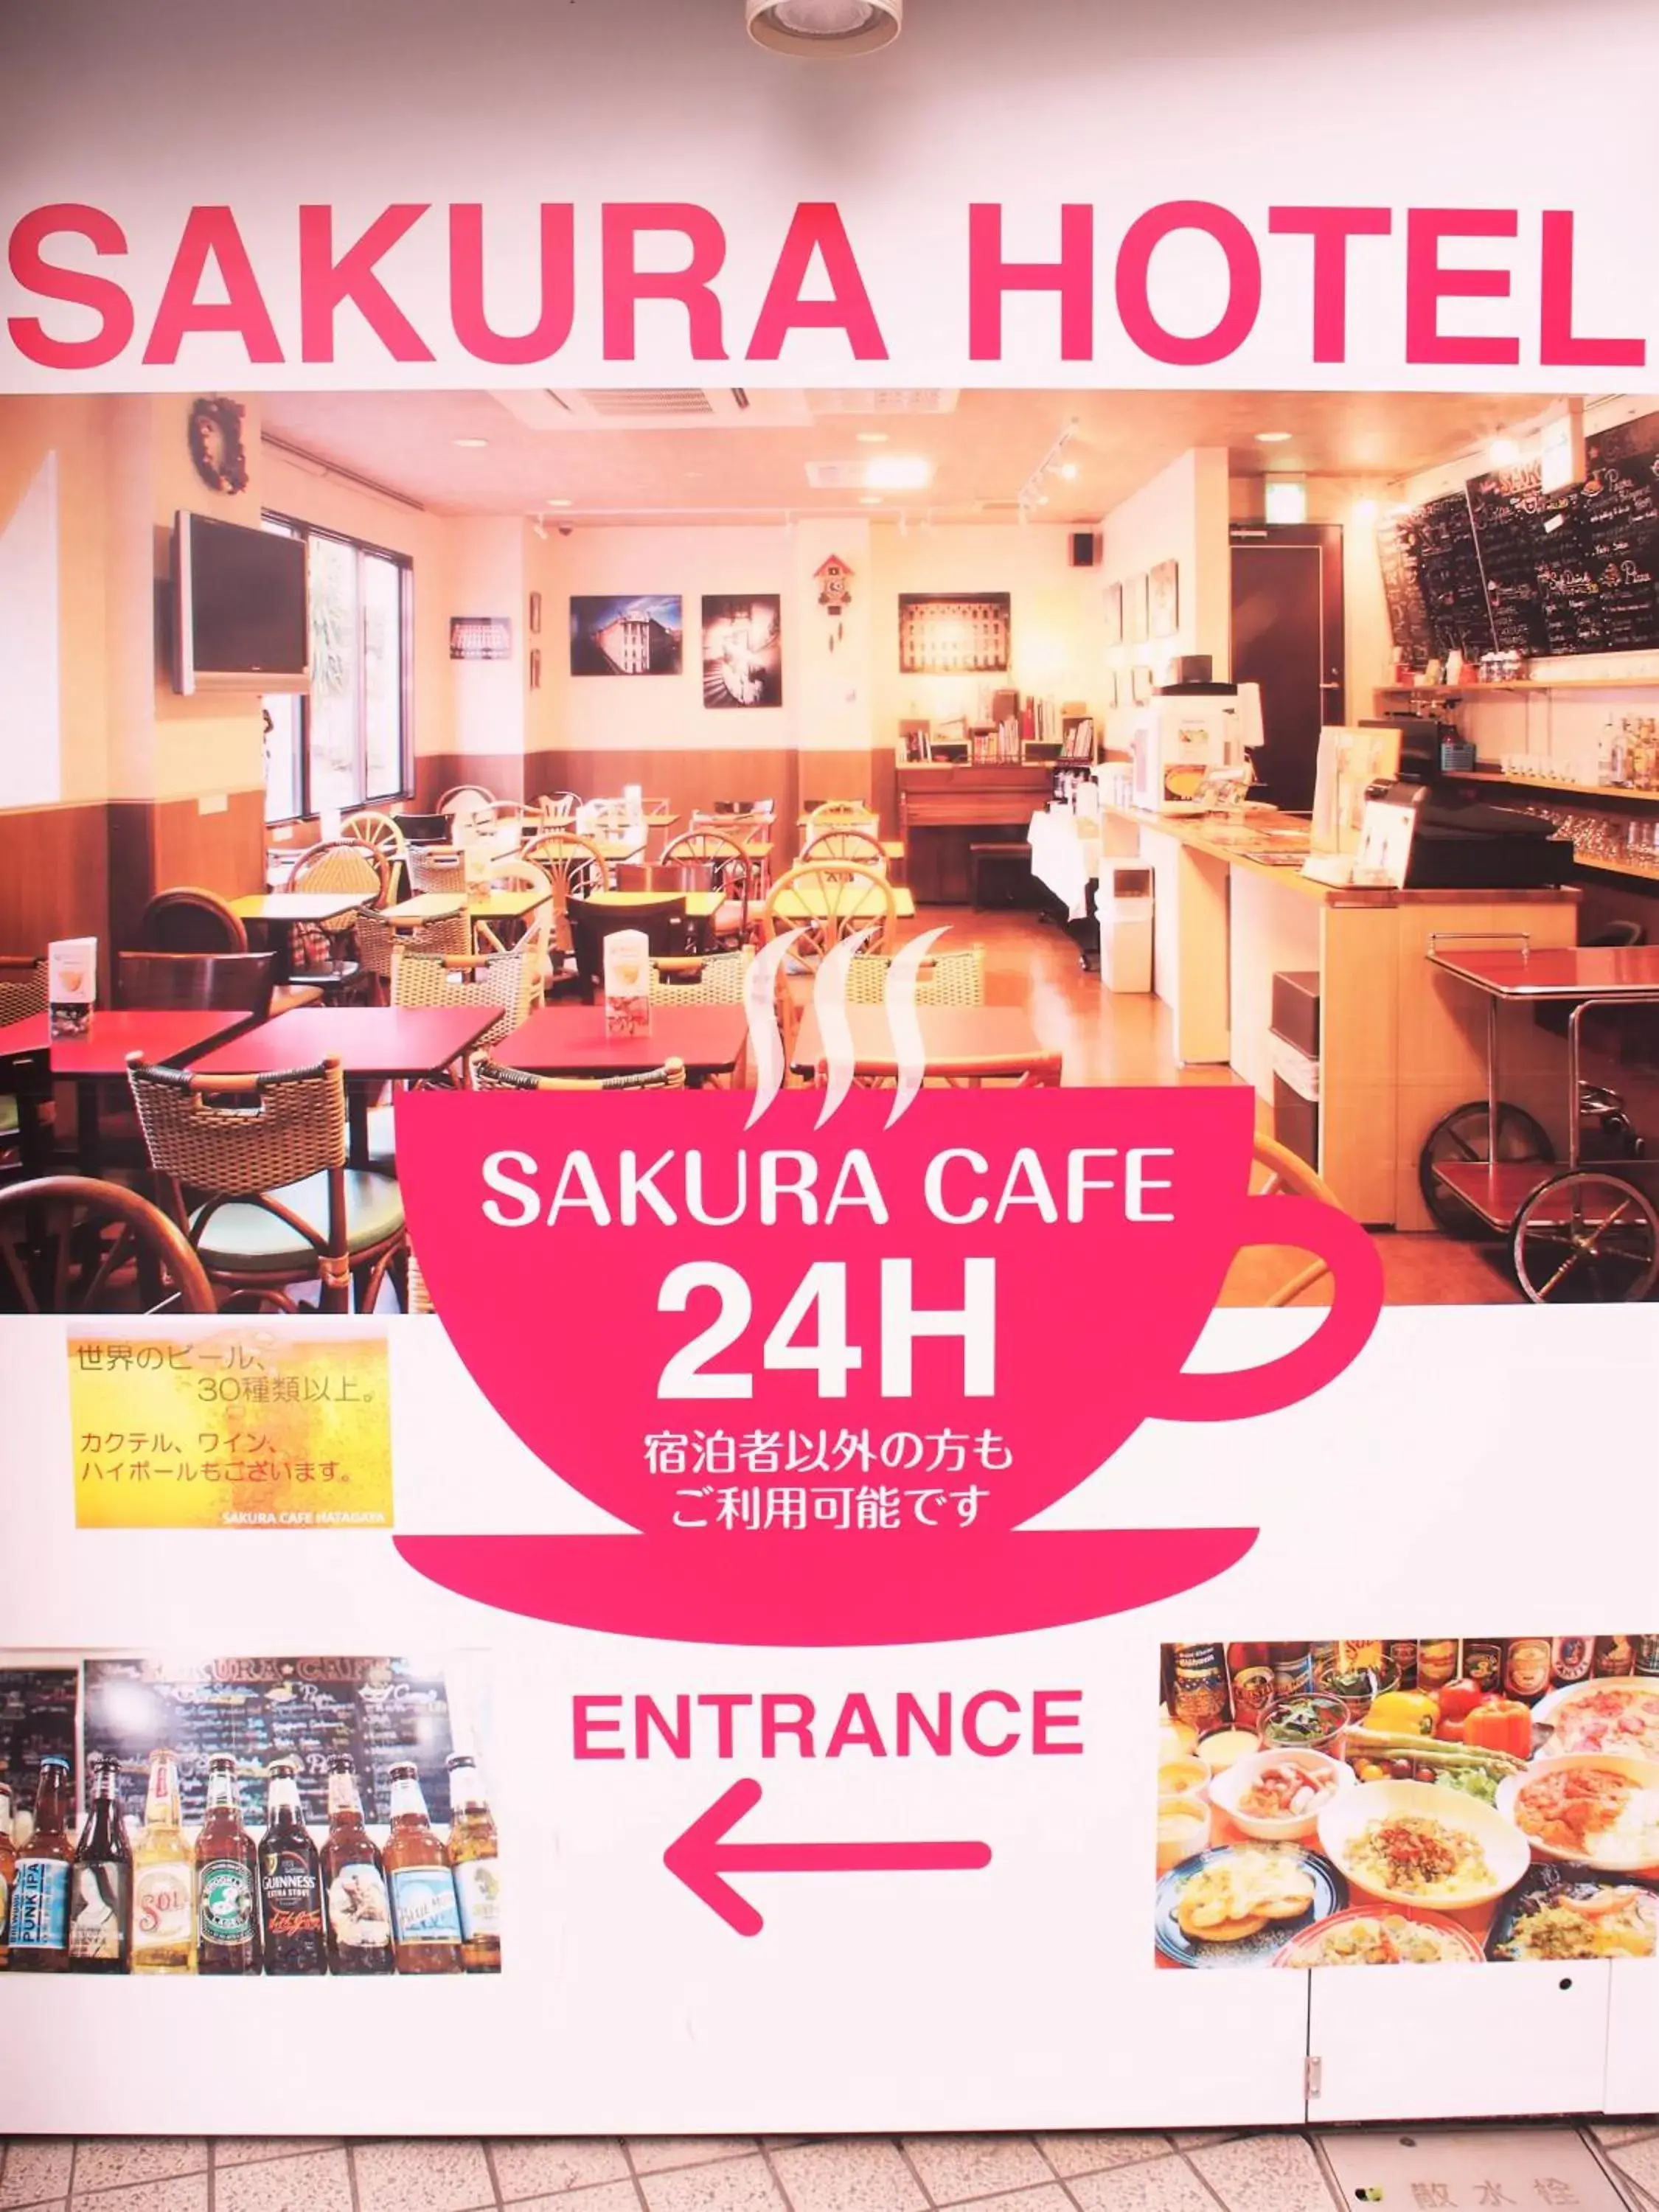 Facade/entrance, Lounge/Bar in Sakura Hotel Hatagaya